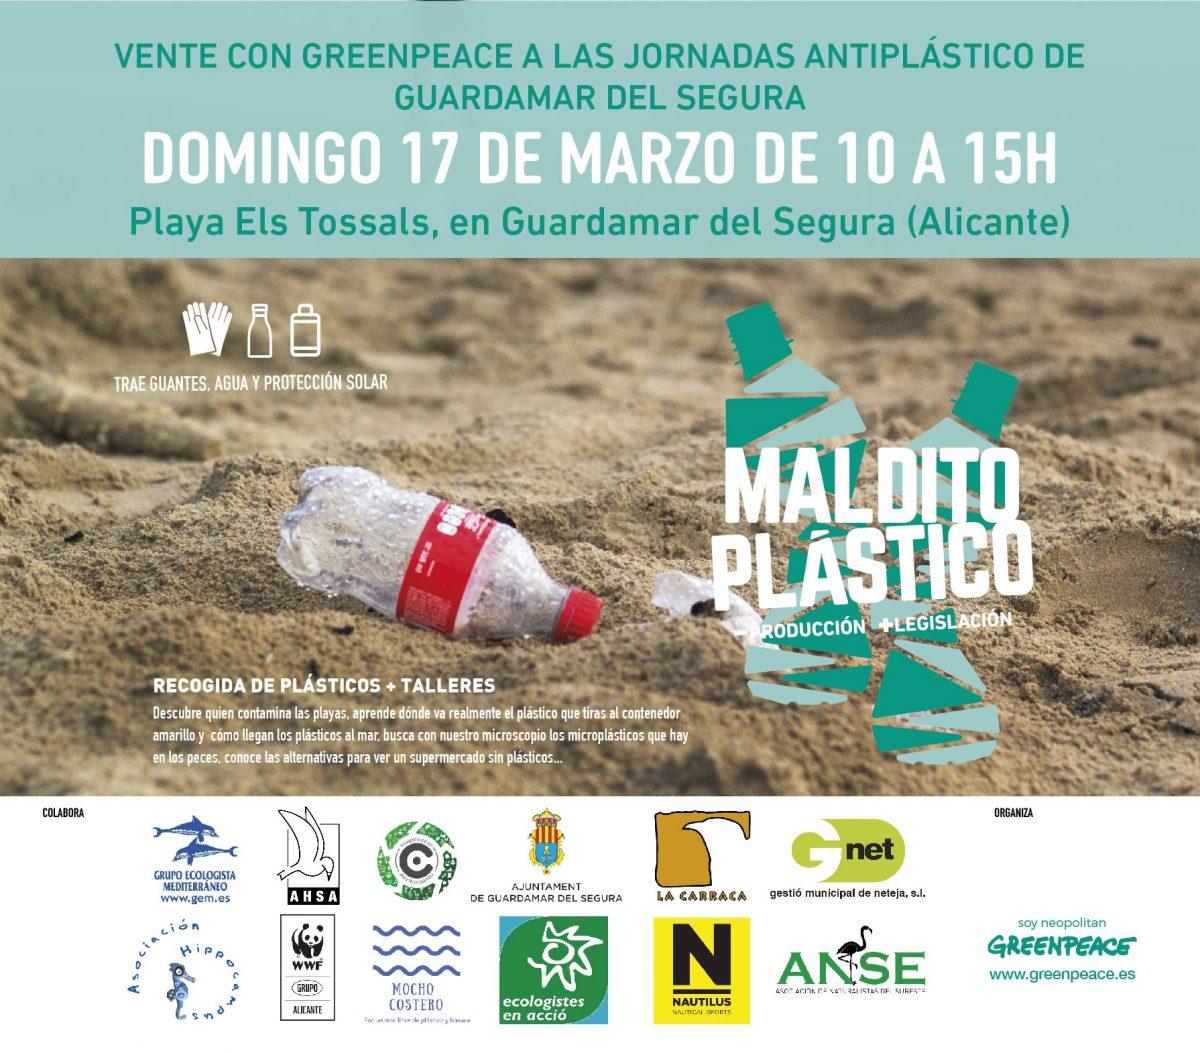 Limpiar playa de Guardamar del Segura, Greenpeace